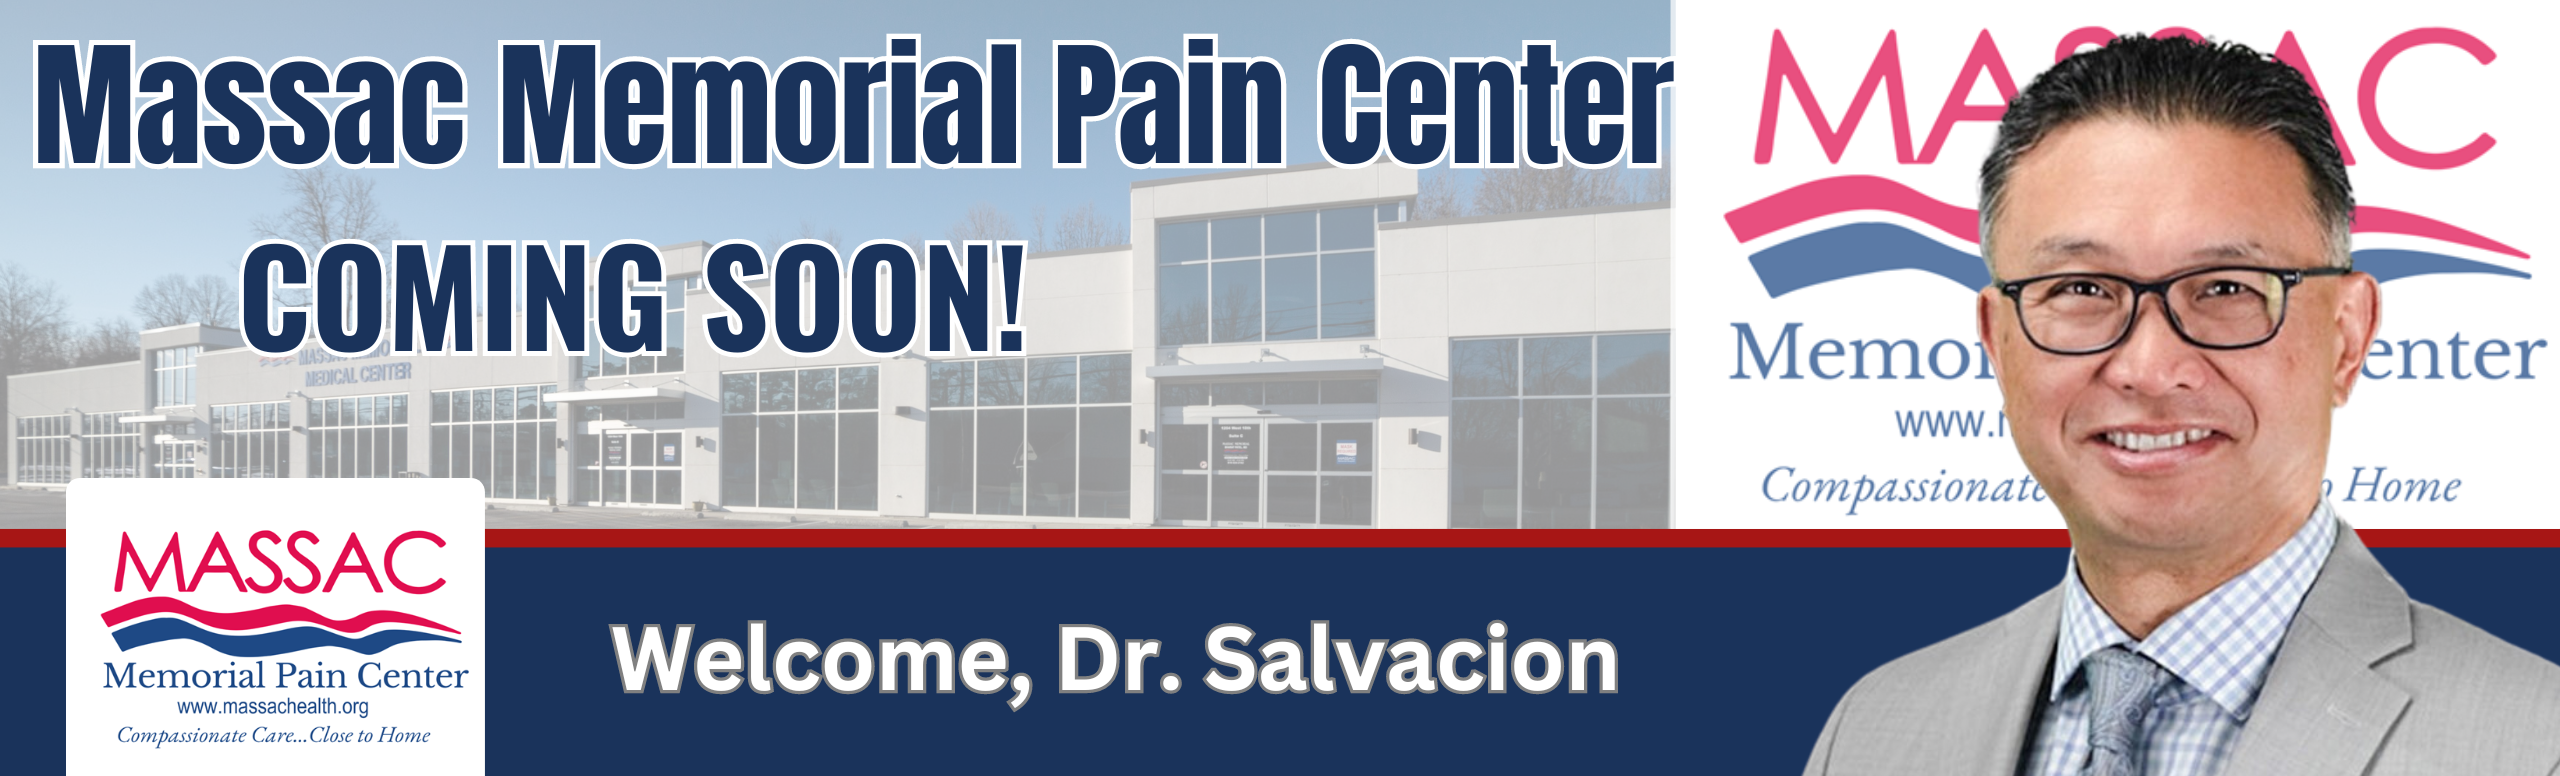 Massac Memorial Pain Center Coming Soon!

Welcome, Dr. Salvacion